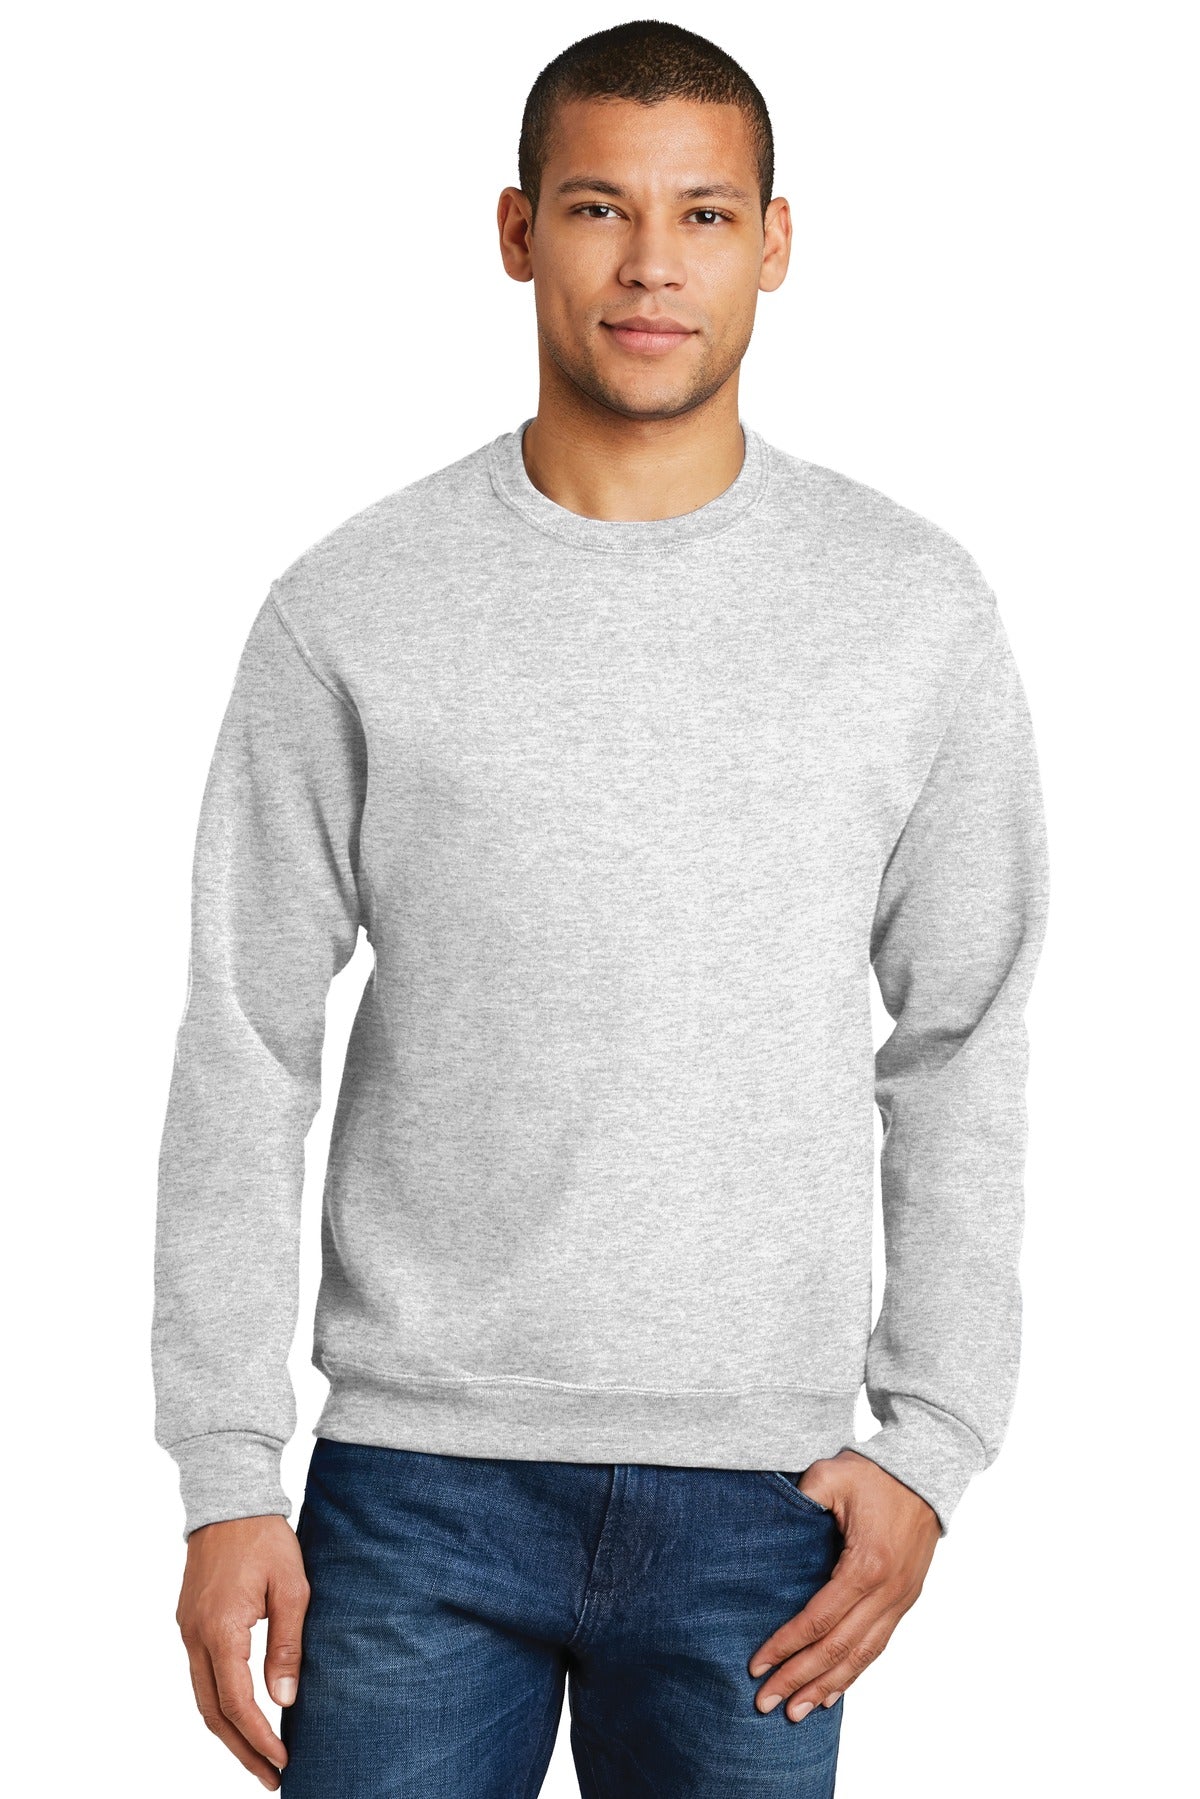 JERZEES® - NuBlend® Crewneck Sweatshirt. 562M - DFW Impression